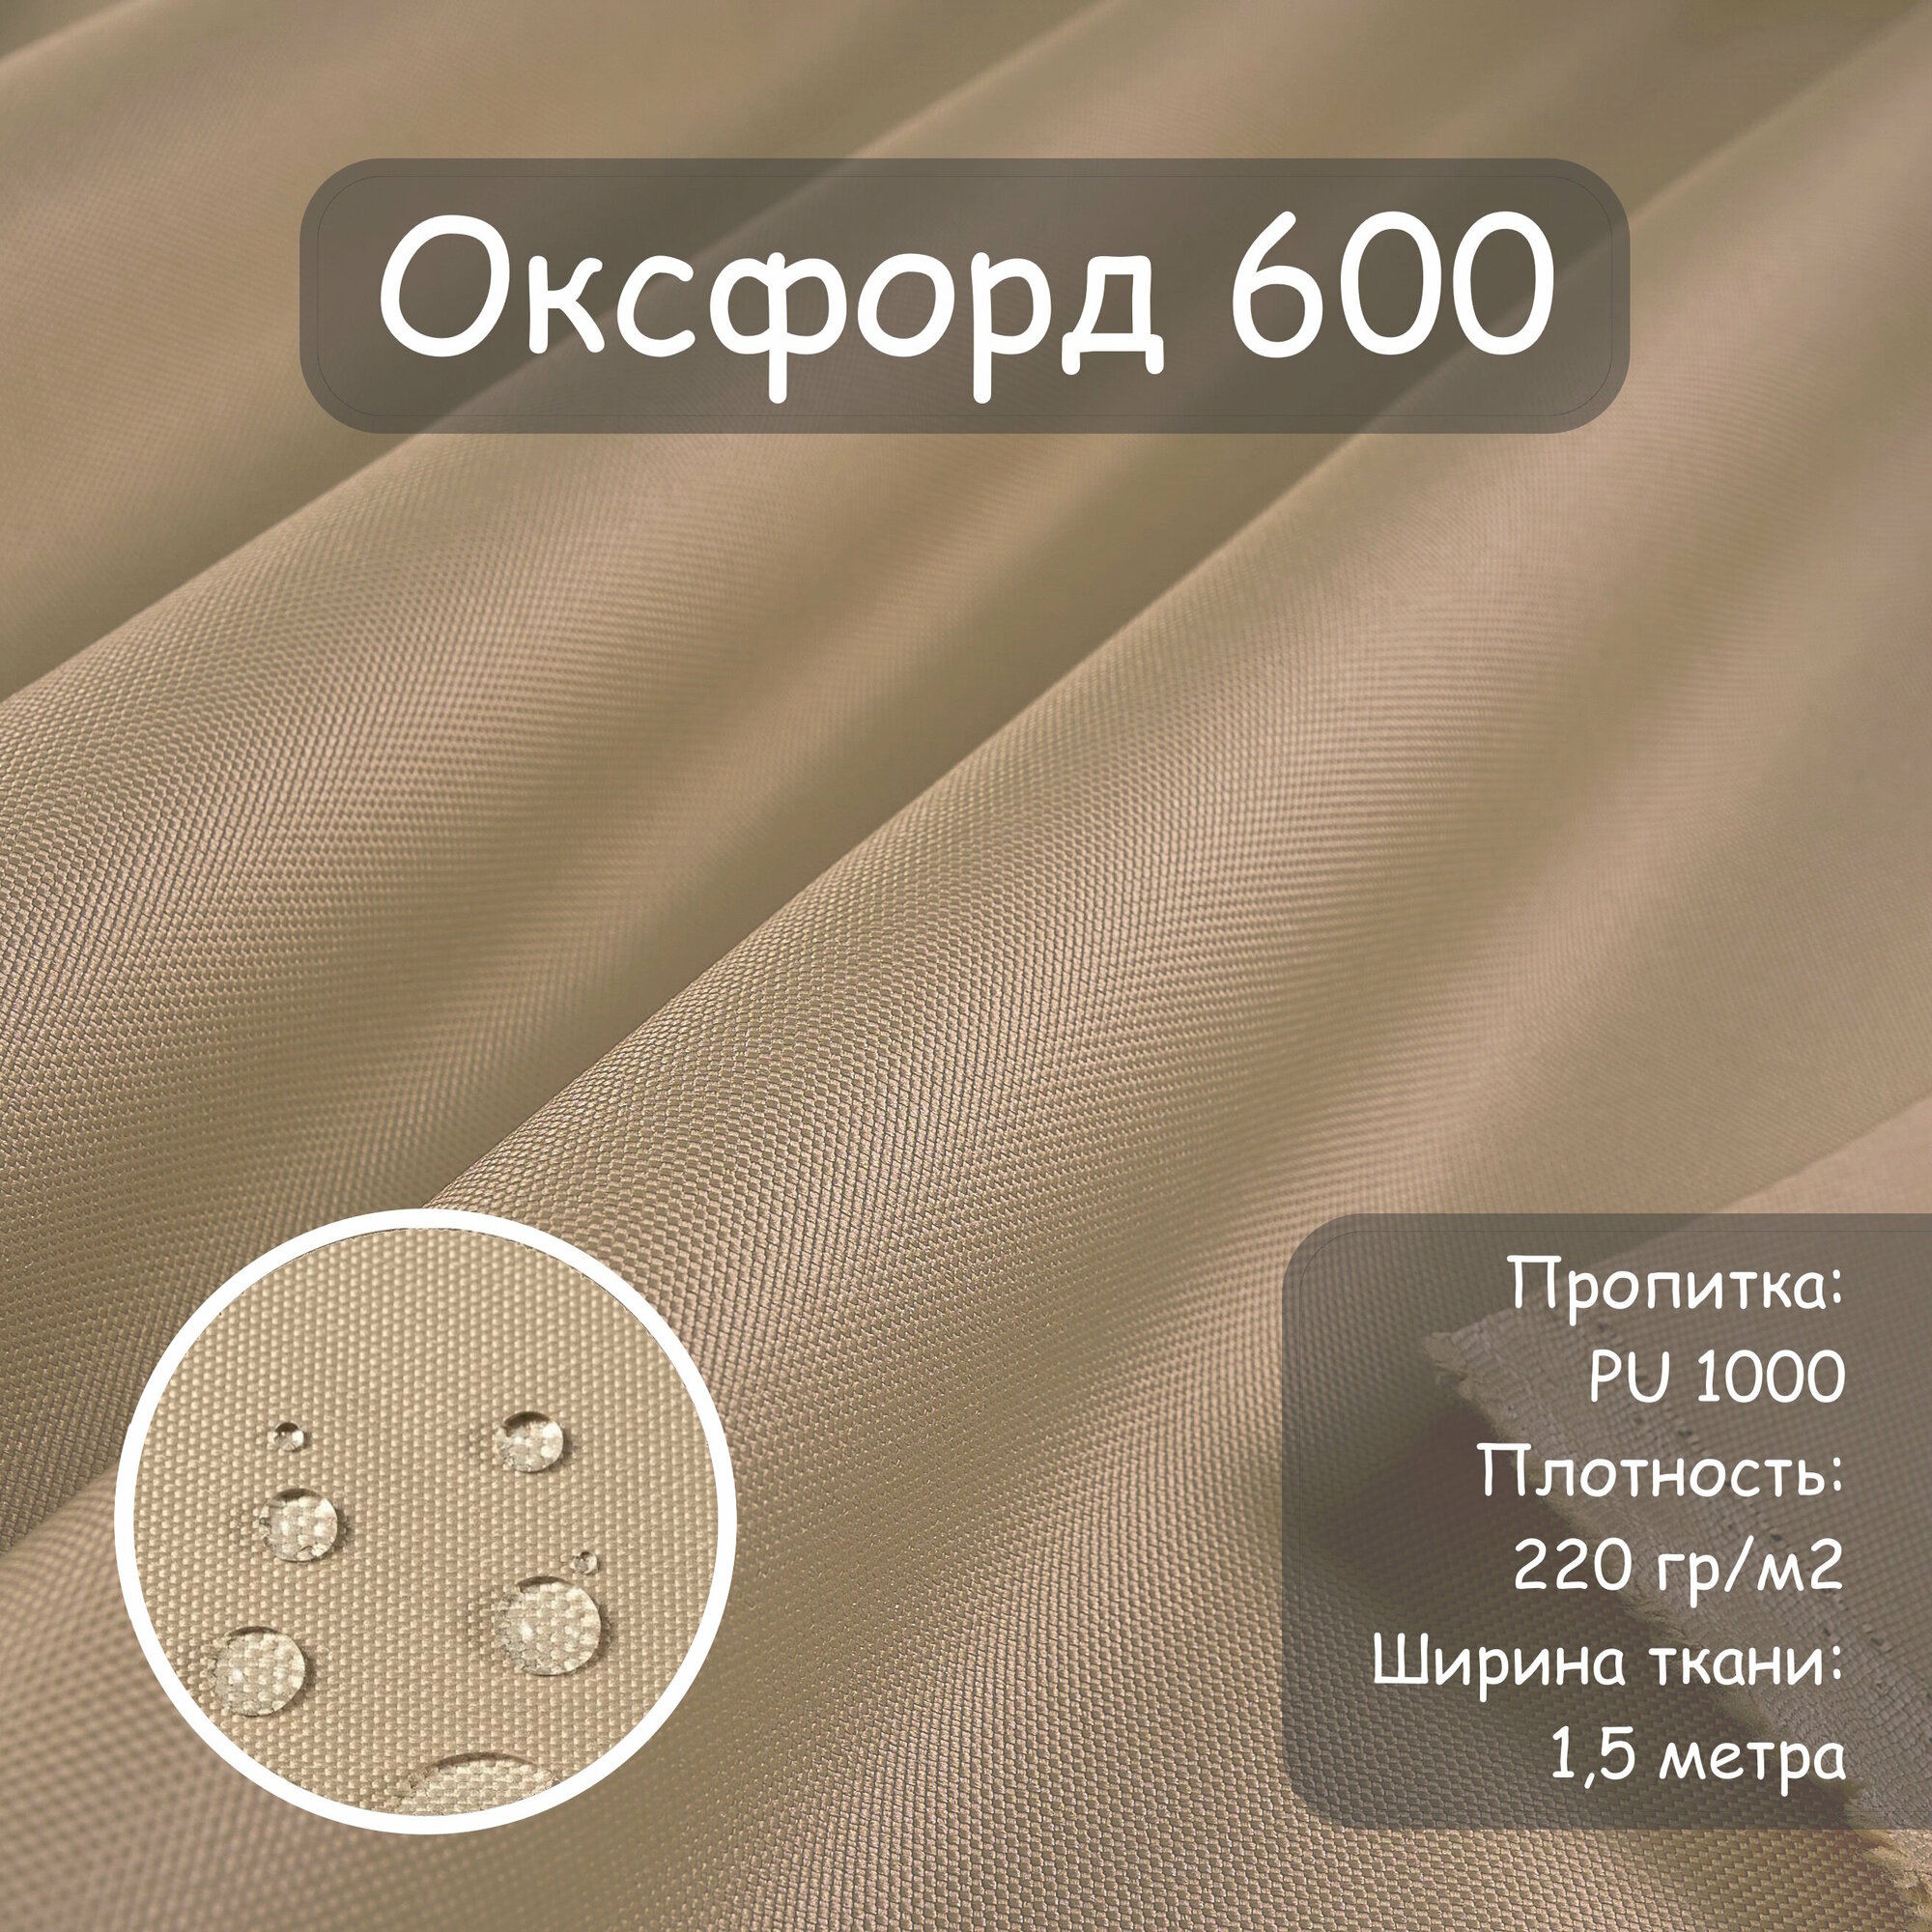 Ткань Оксфорд 600 PU (ПУ), цвет бежевый, водоотталкивающая, ширина 150 см, цена за пог. метр